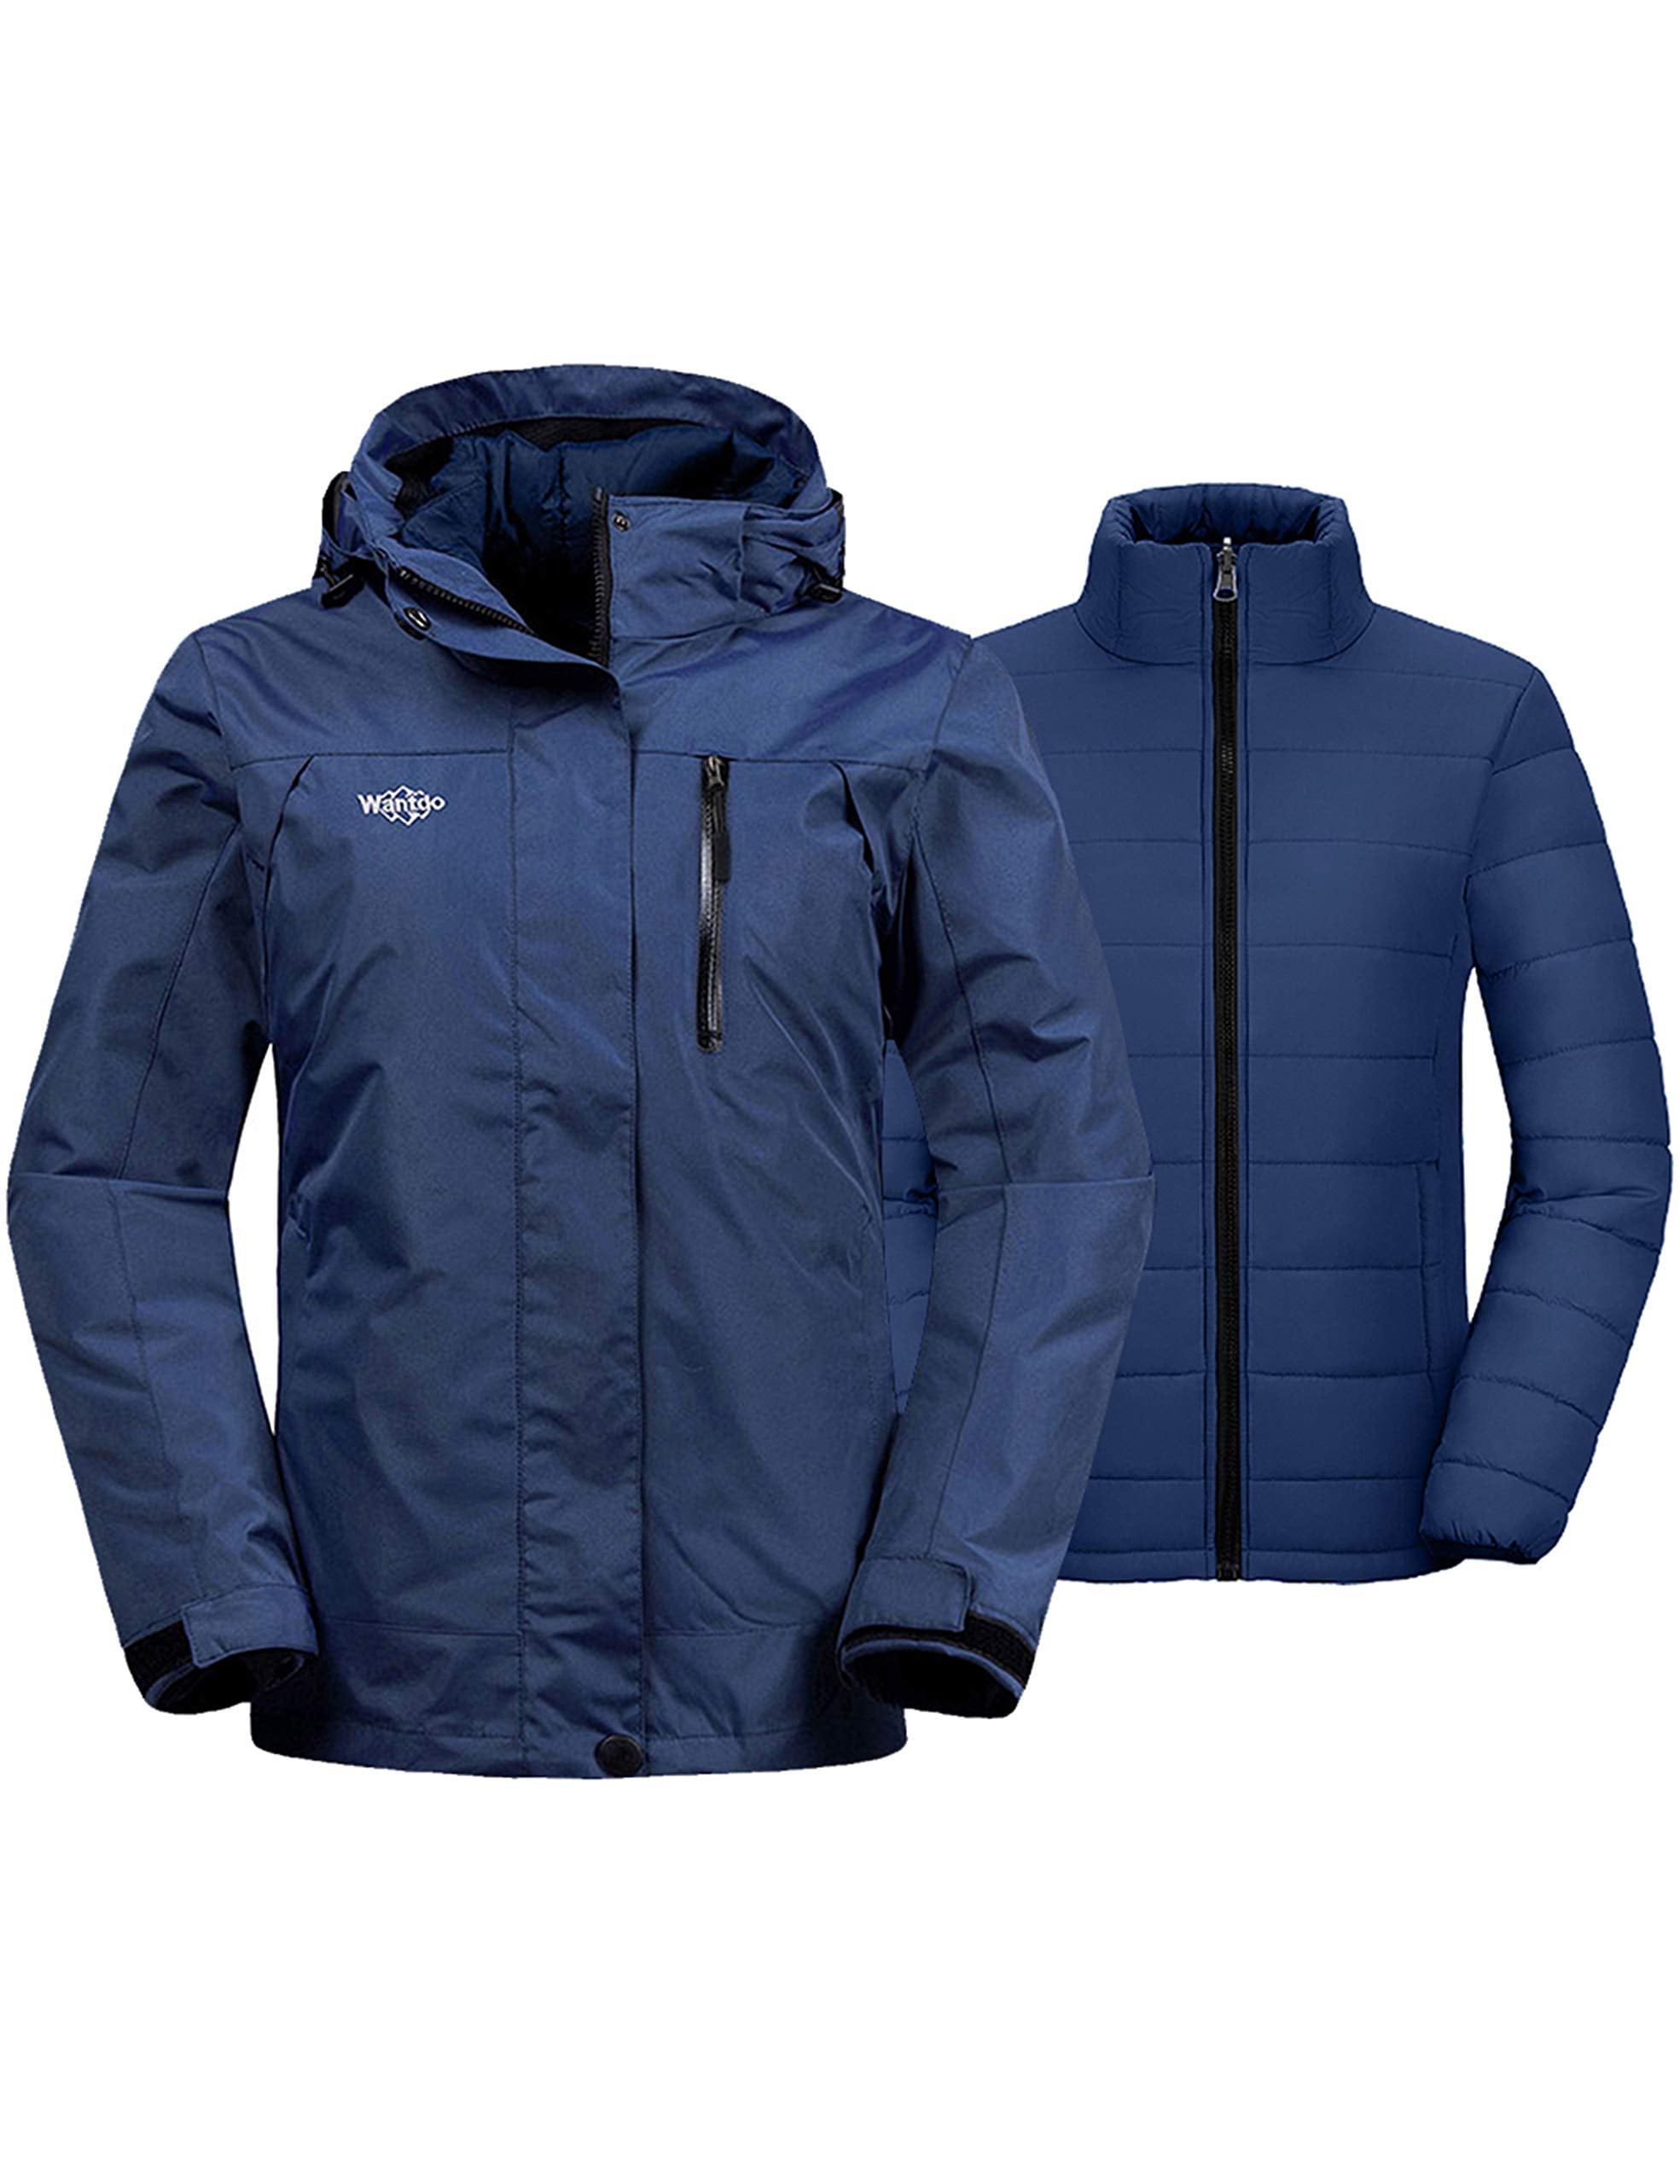 Wantdo Women's Ski Jacket Fleece Lining Winter Coat with Detachable Hood